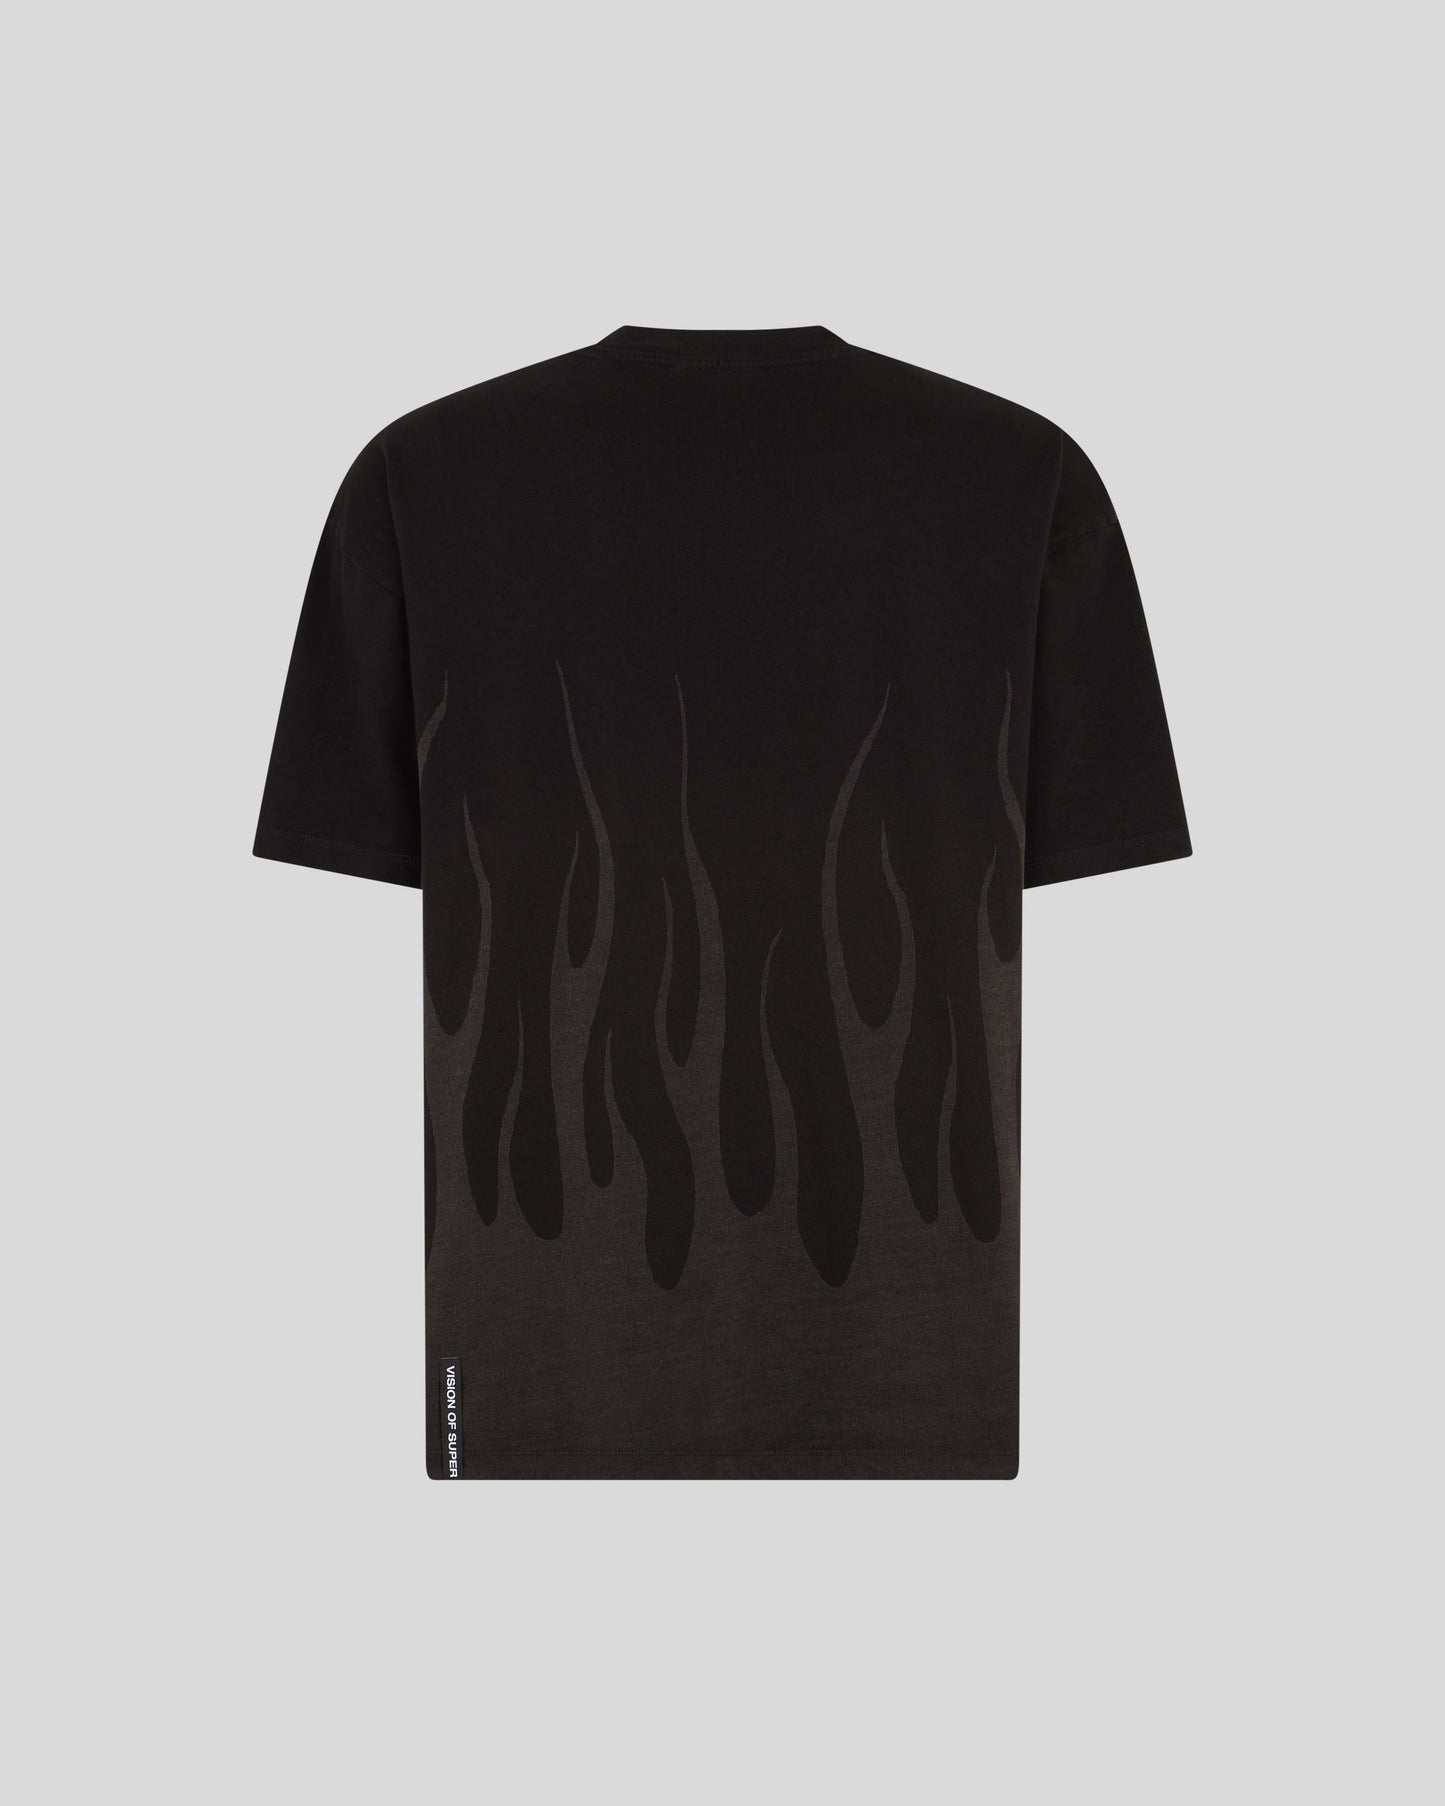 Corrosive Flames t-shirt